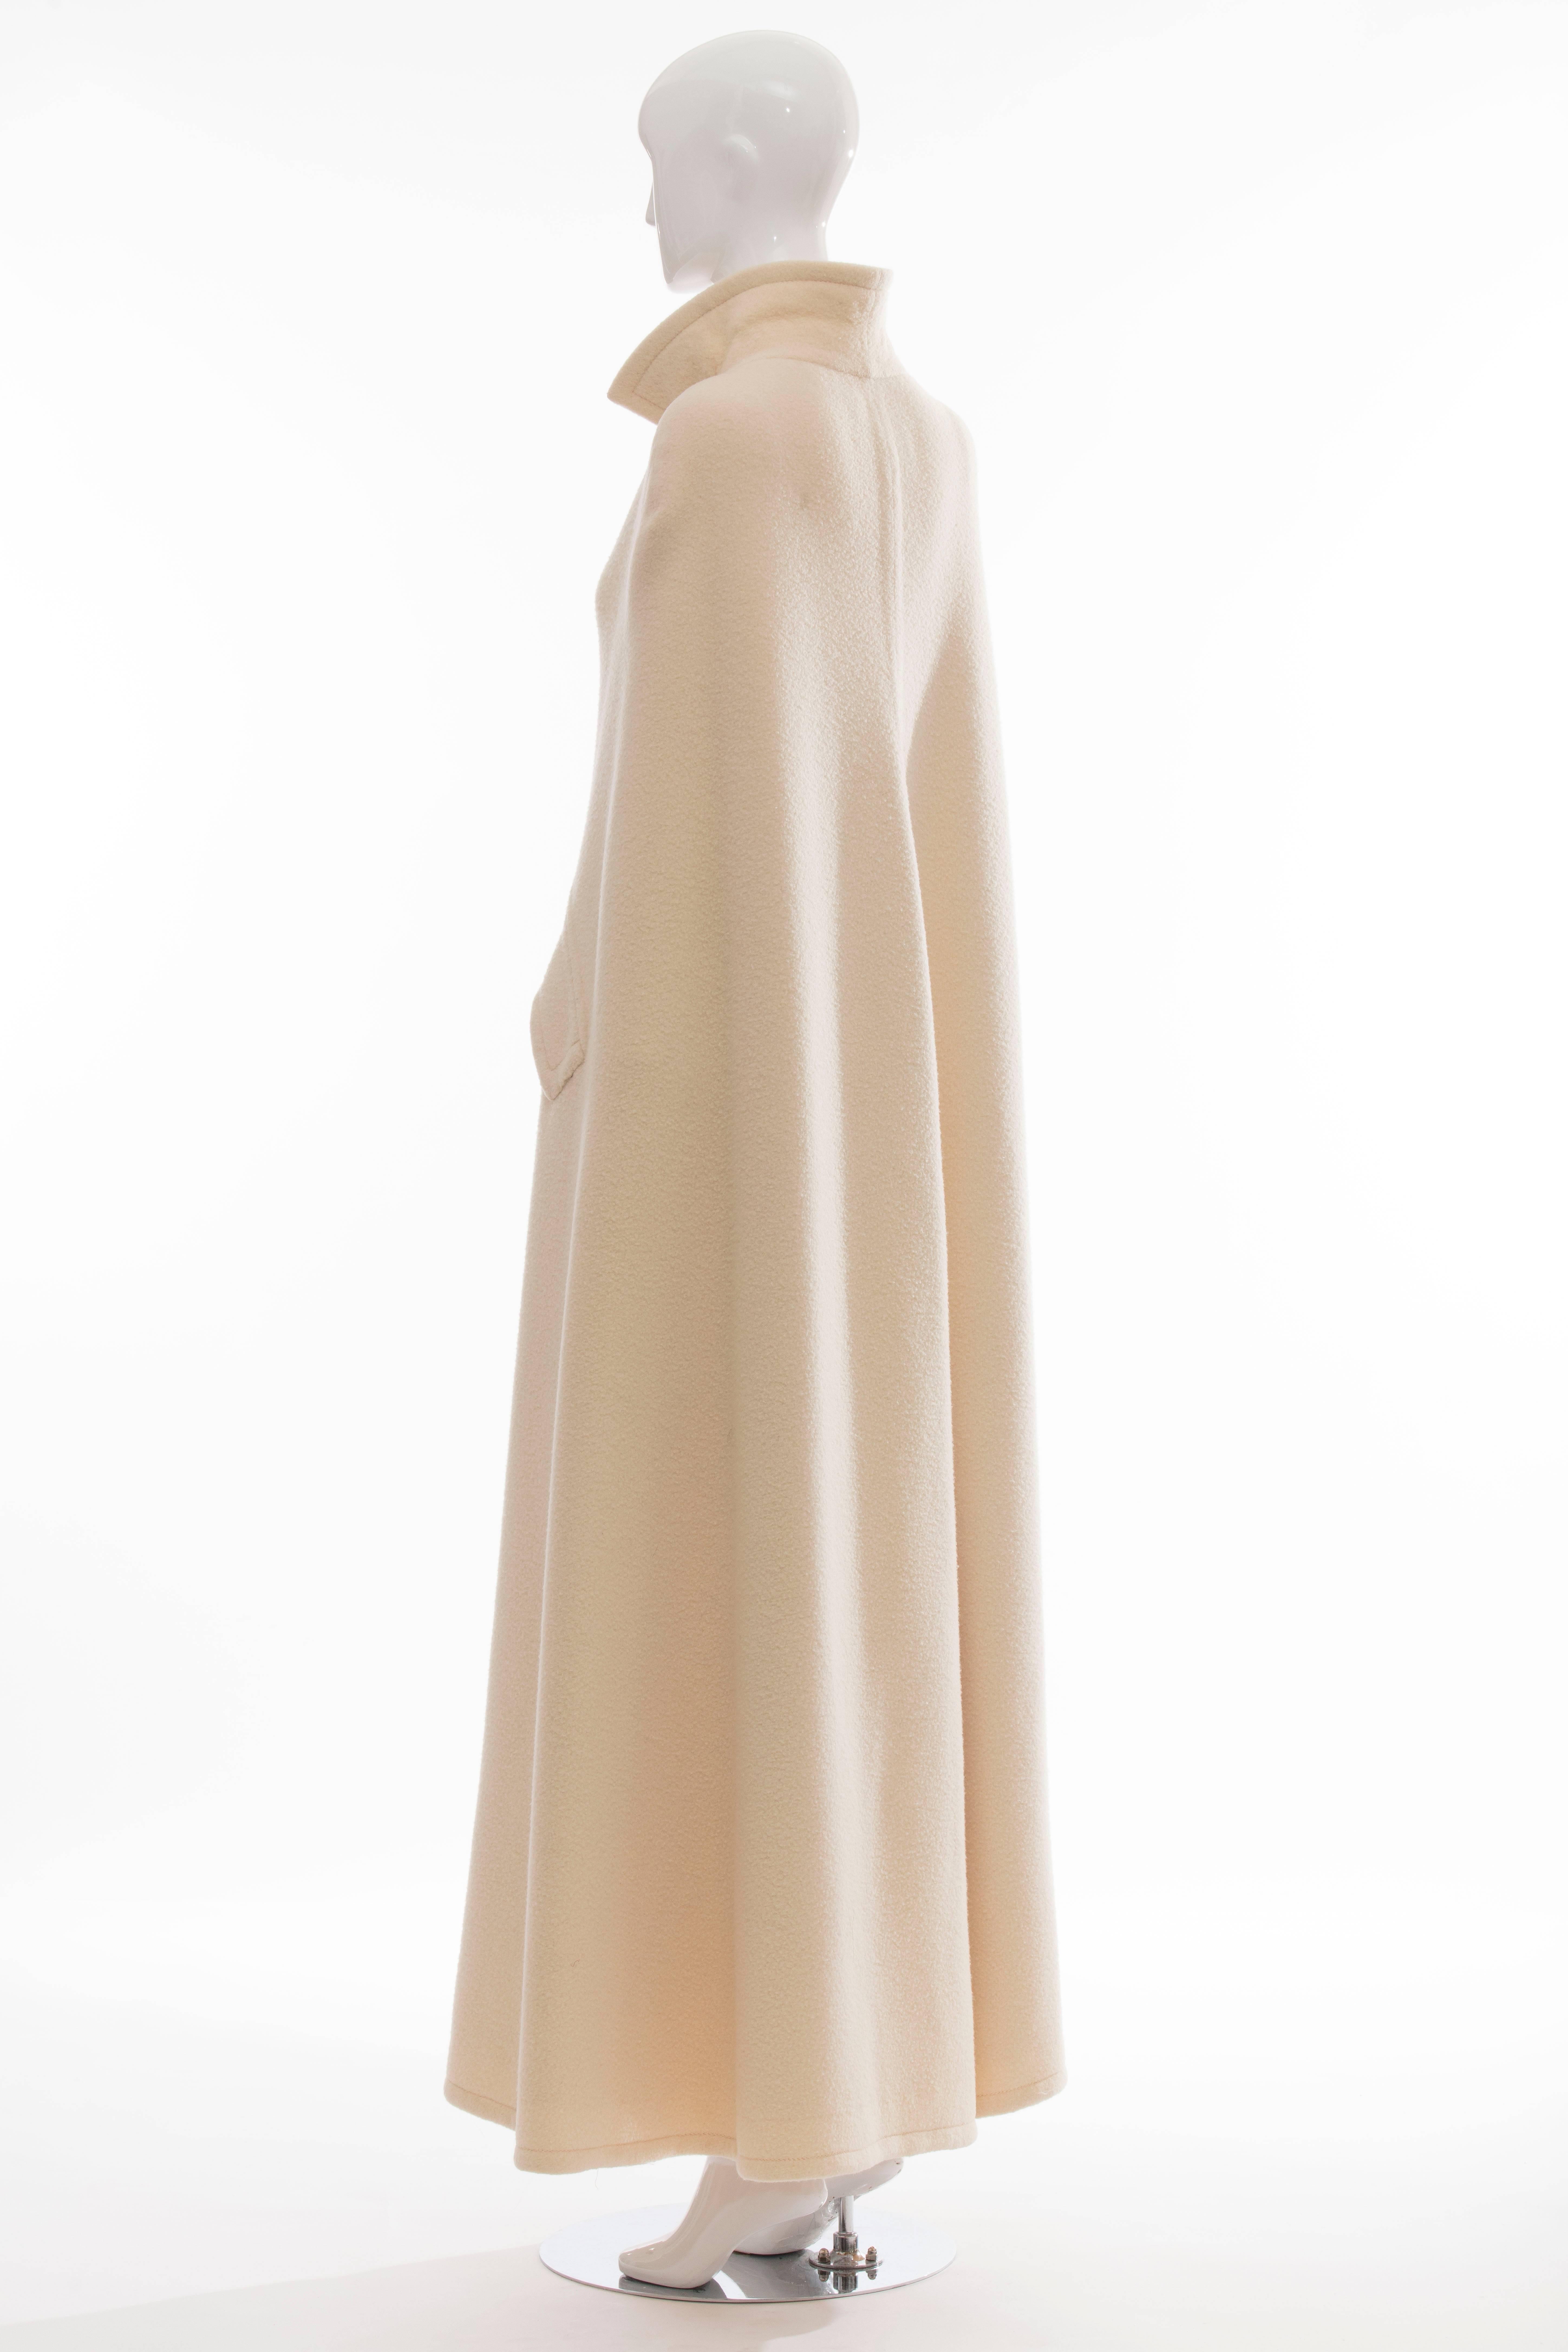 Christian Dior Haute Couture By Marc Bohan Cream Wool Cape, Autumn - Winter 1966 1